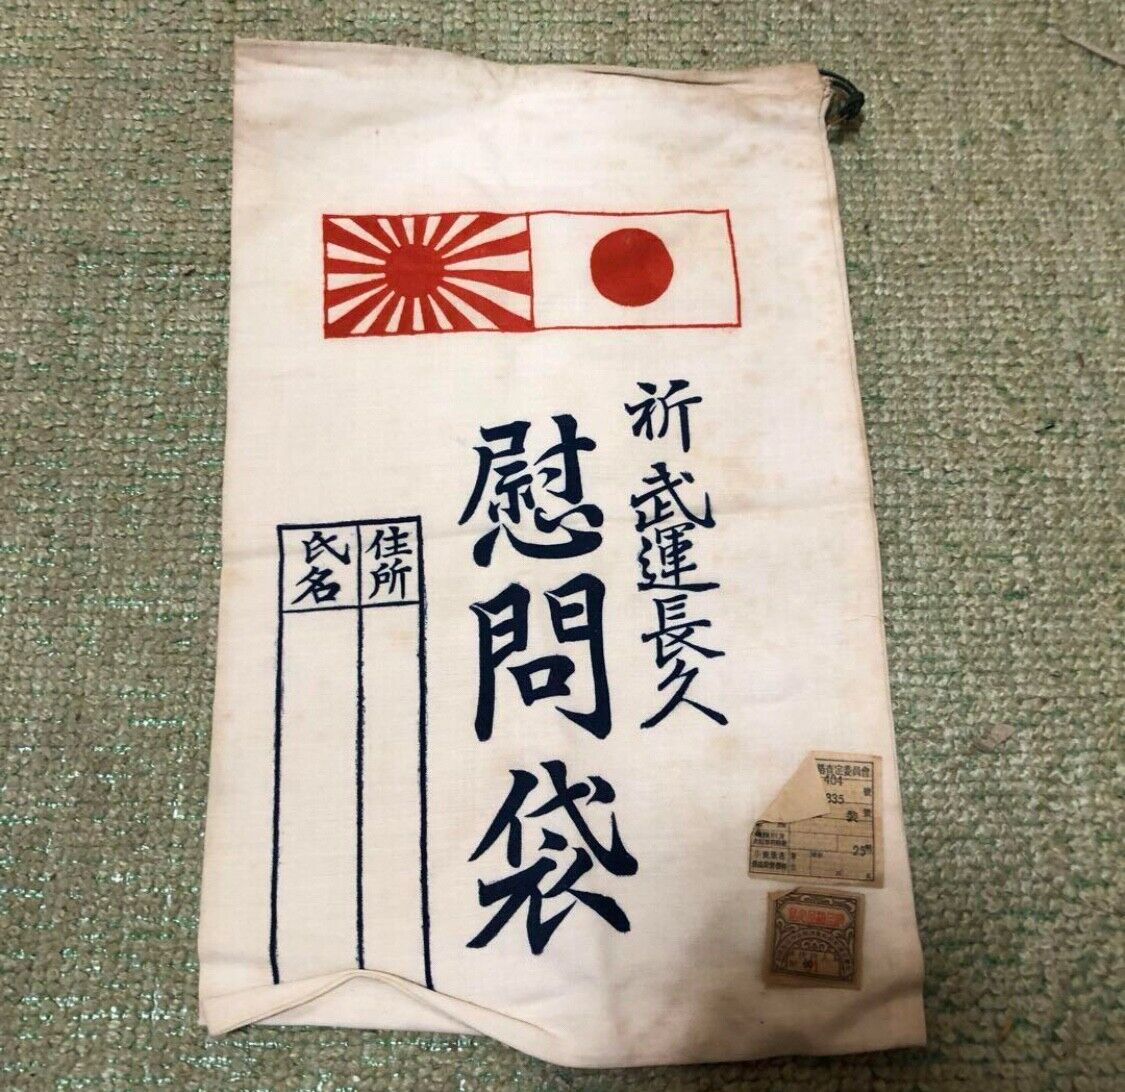 World War II Imperial Japanese Army Comfort Bag - Rising Sun designed